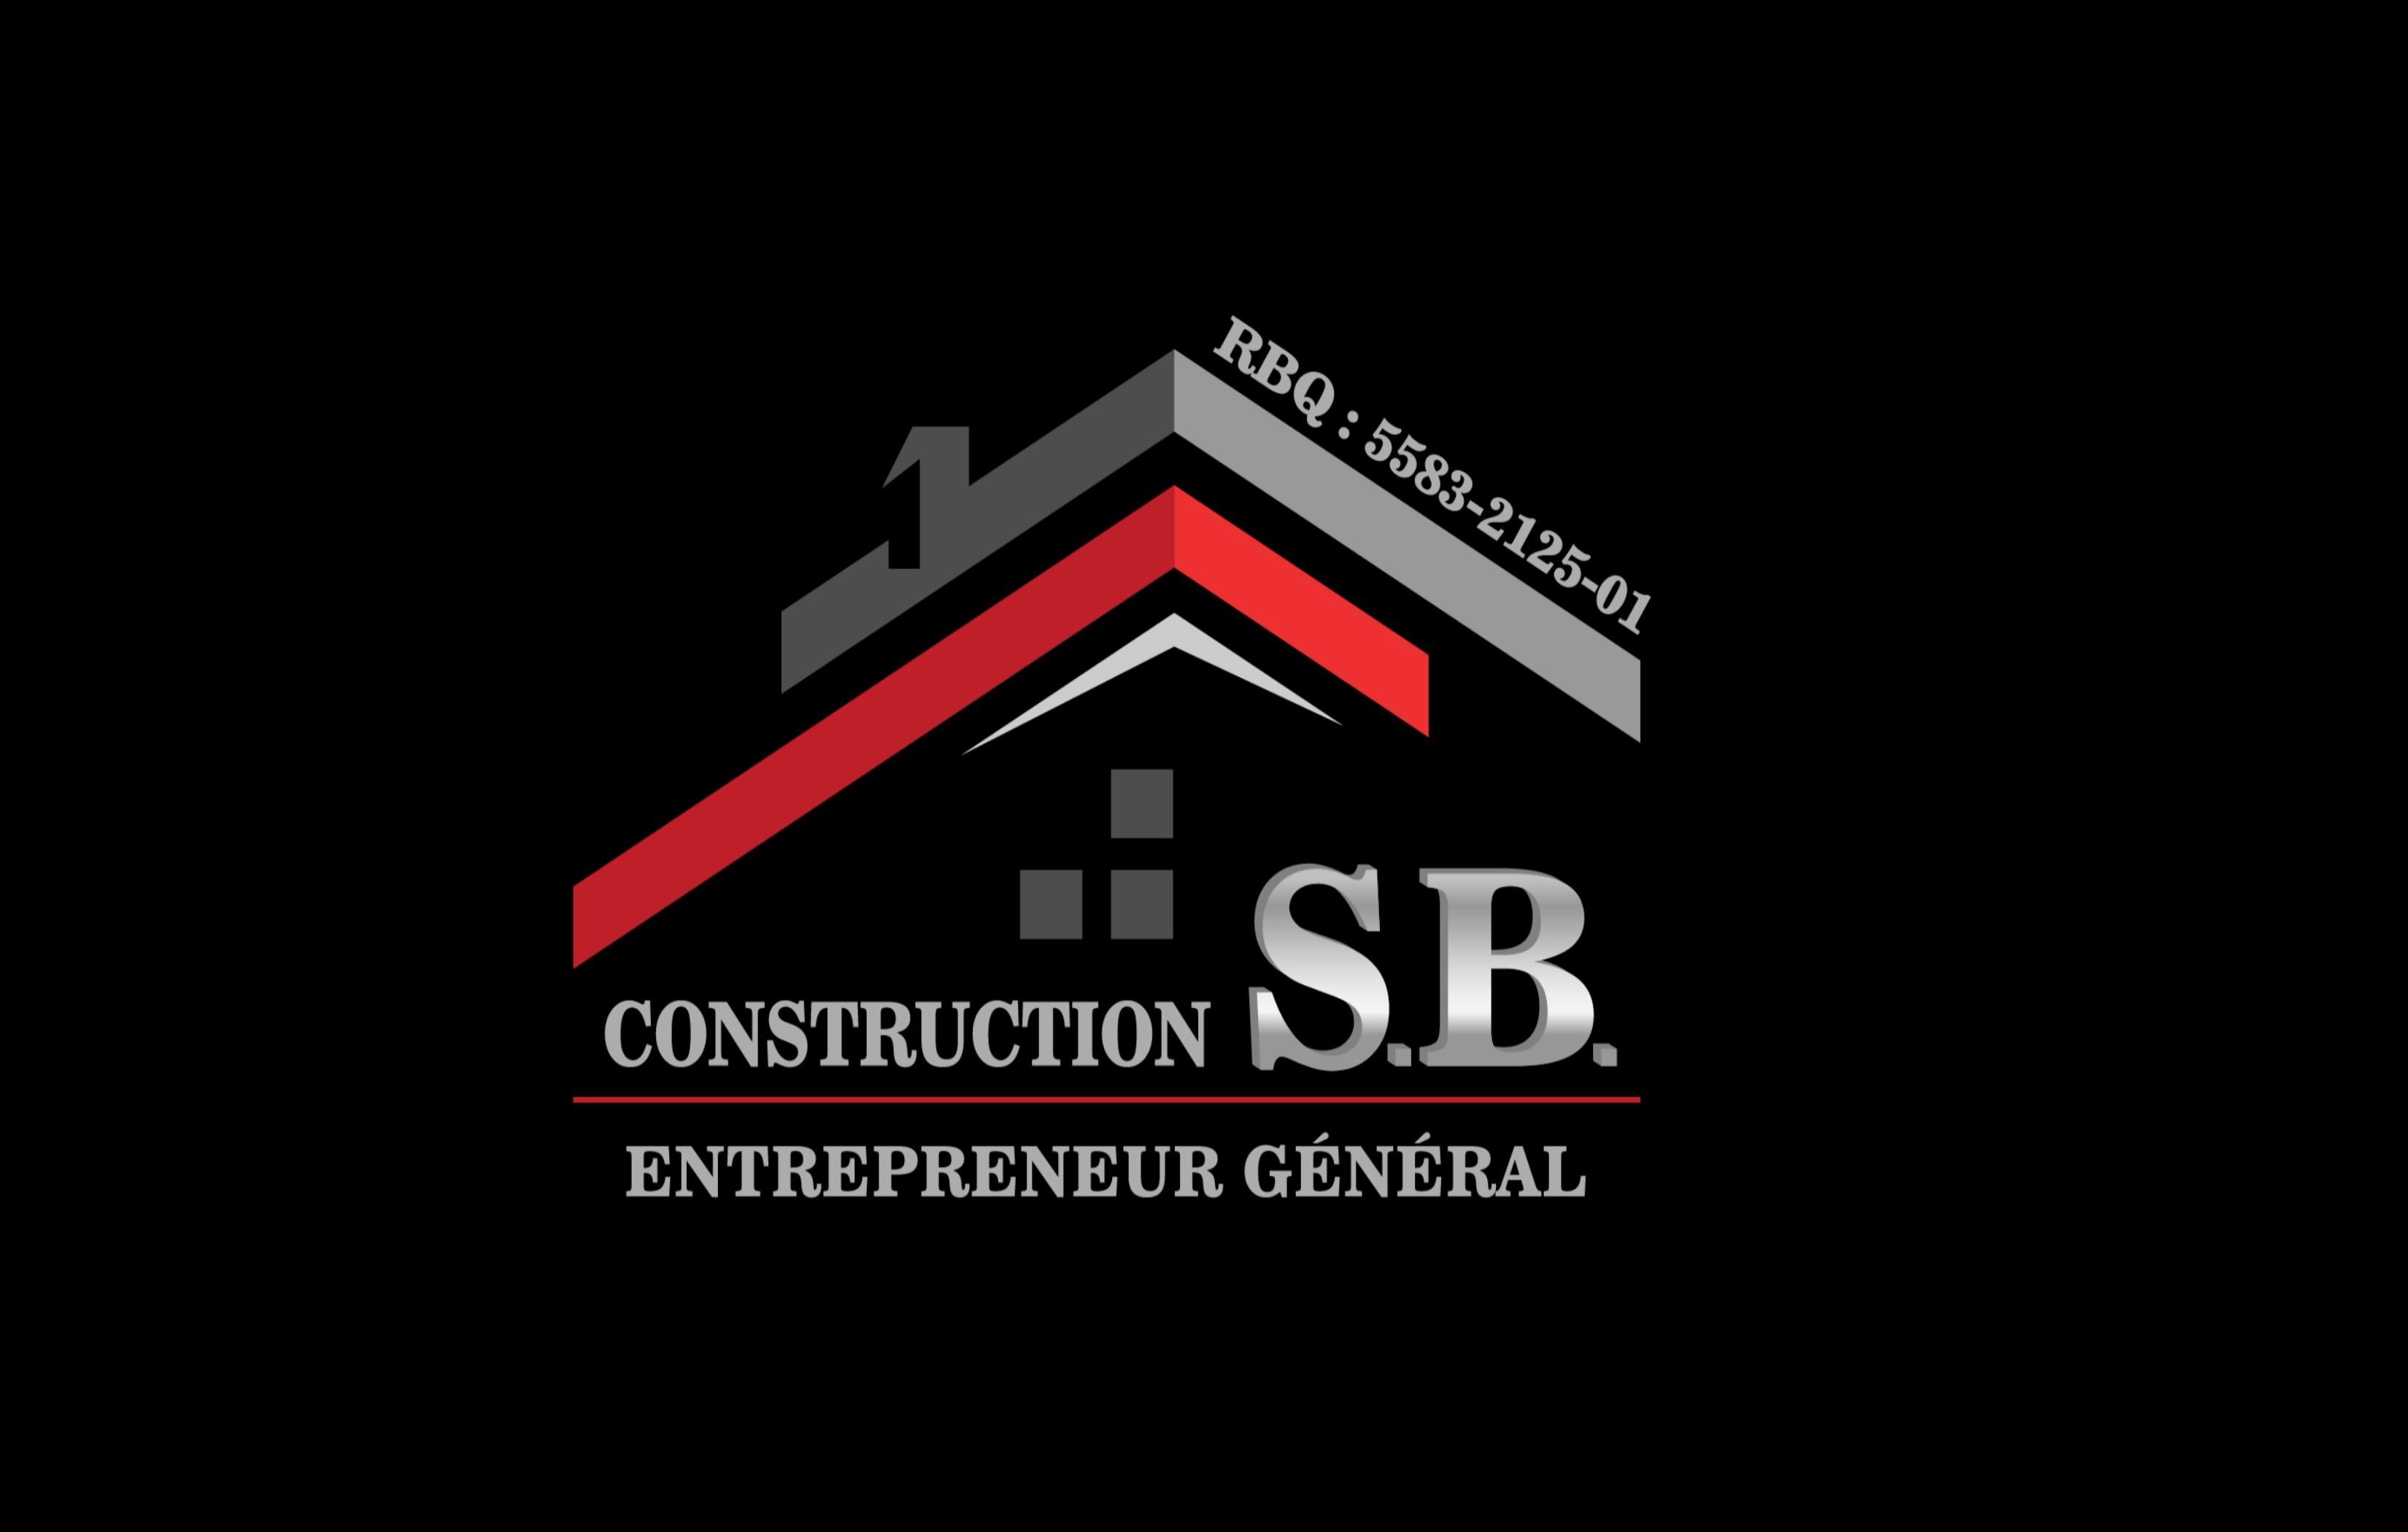 Construction S.B.